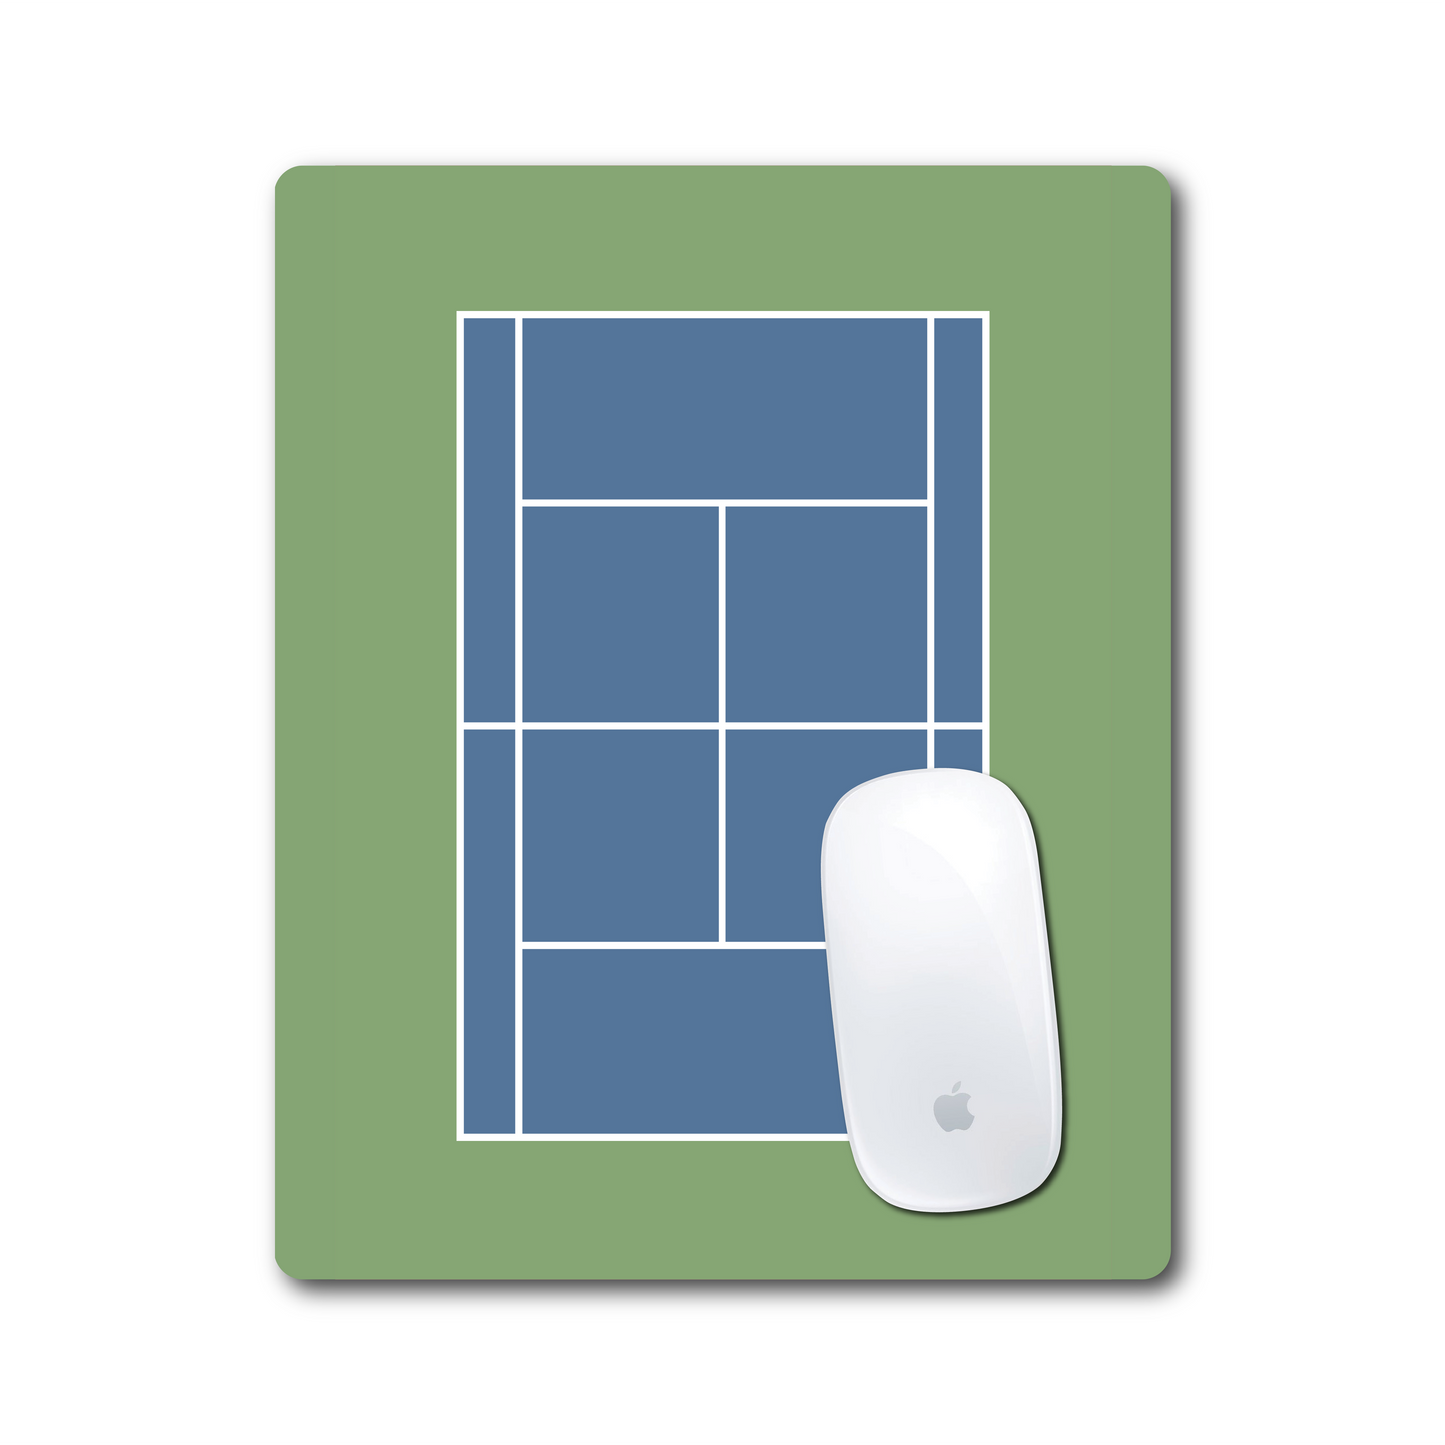 Tennis Court Mouse Pad - Hard Court - Racquet (Racket) Inc Tennis Gifts